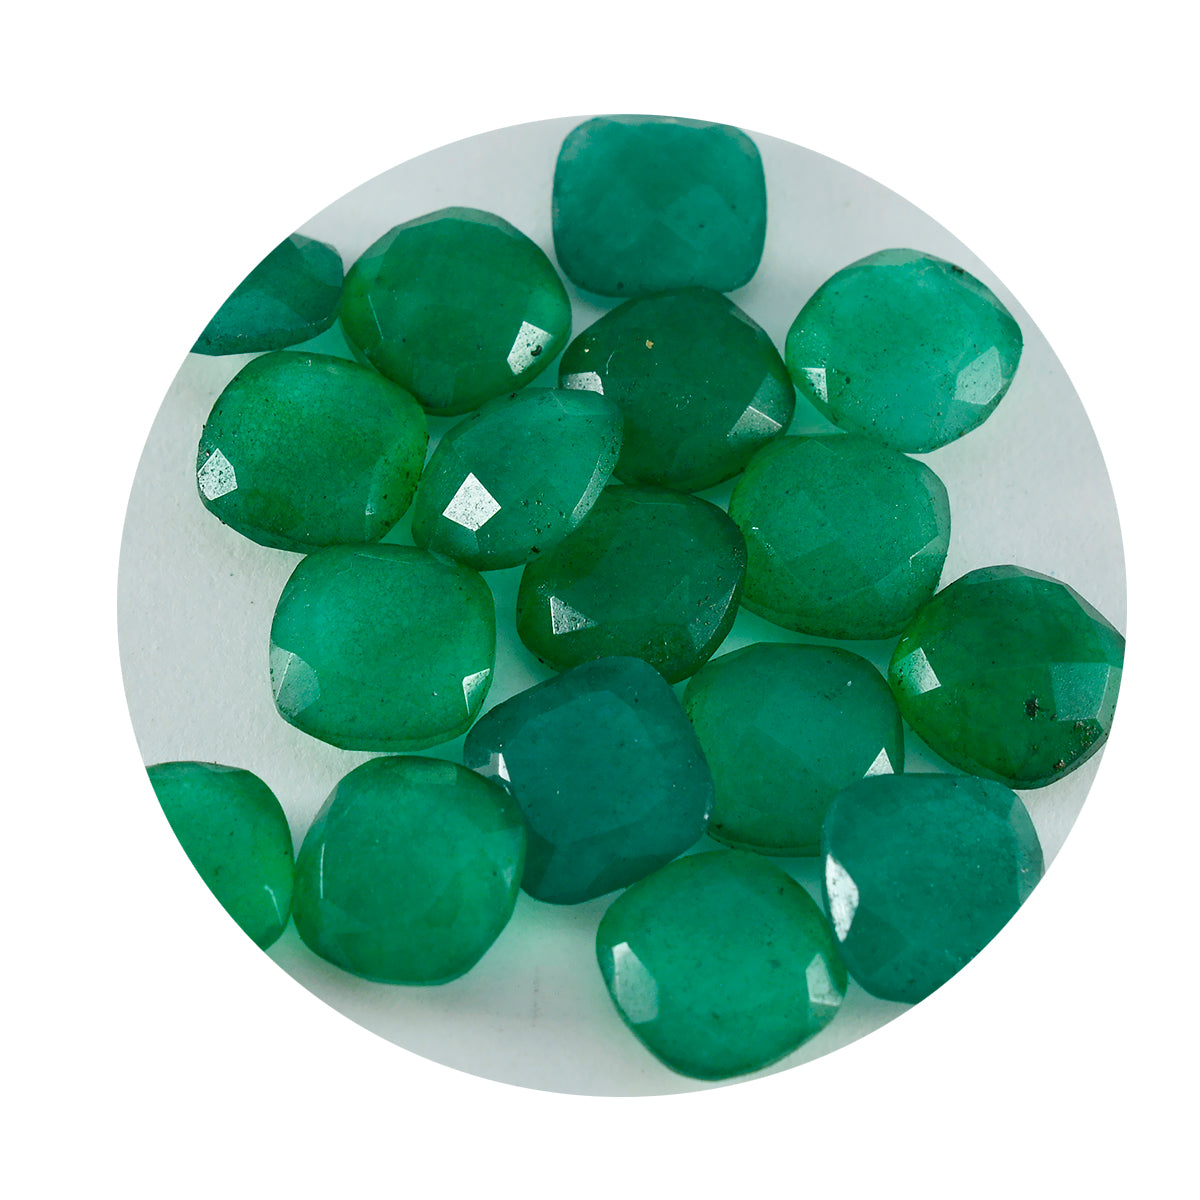 Riyogems 1PC Genuine Green Jasper Faceted 4x4 mm Cushion Shape A1 Quality Loose Gems